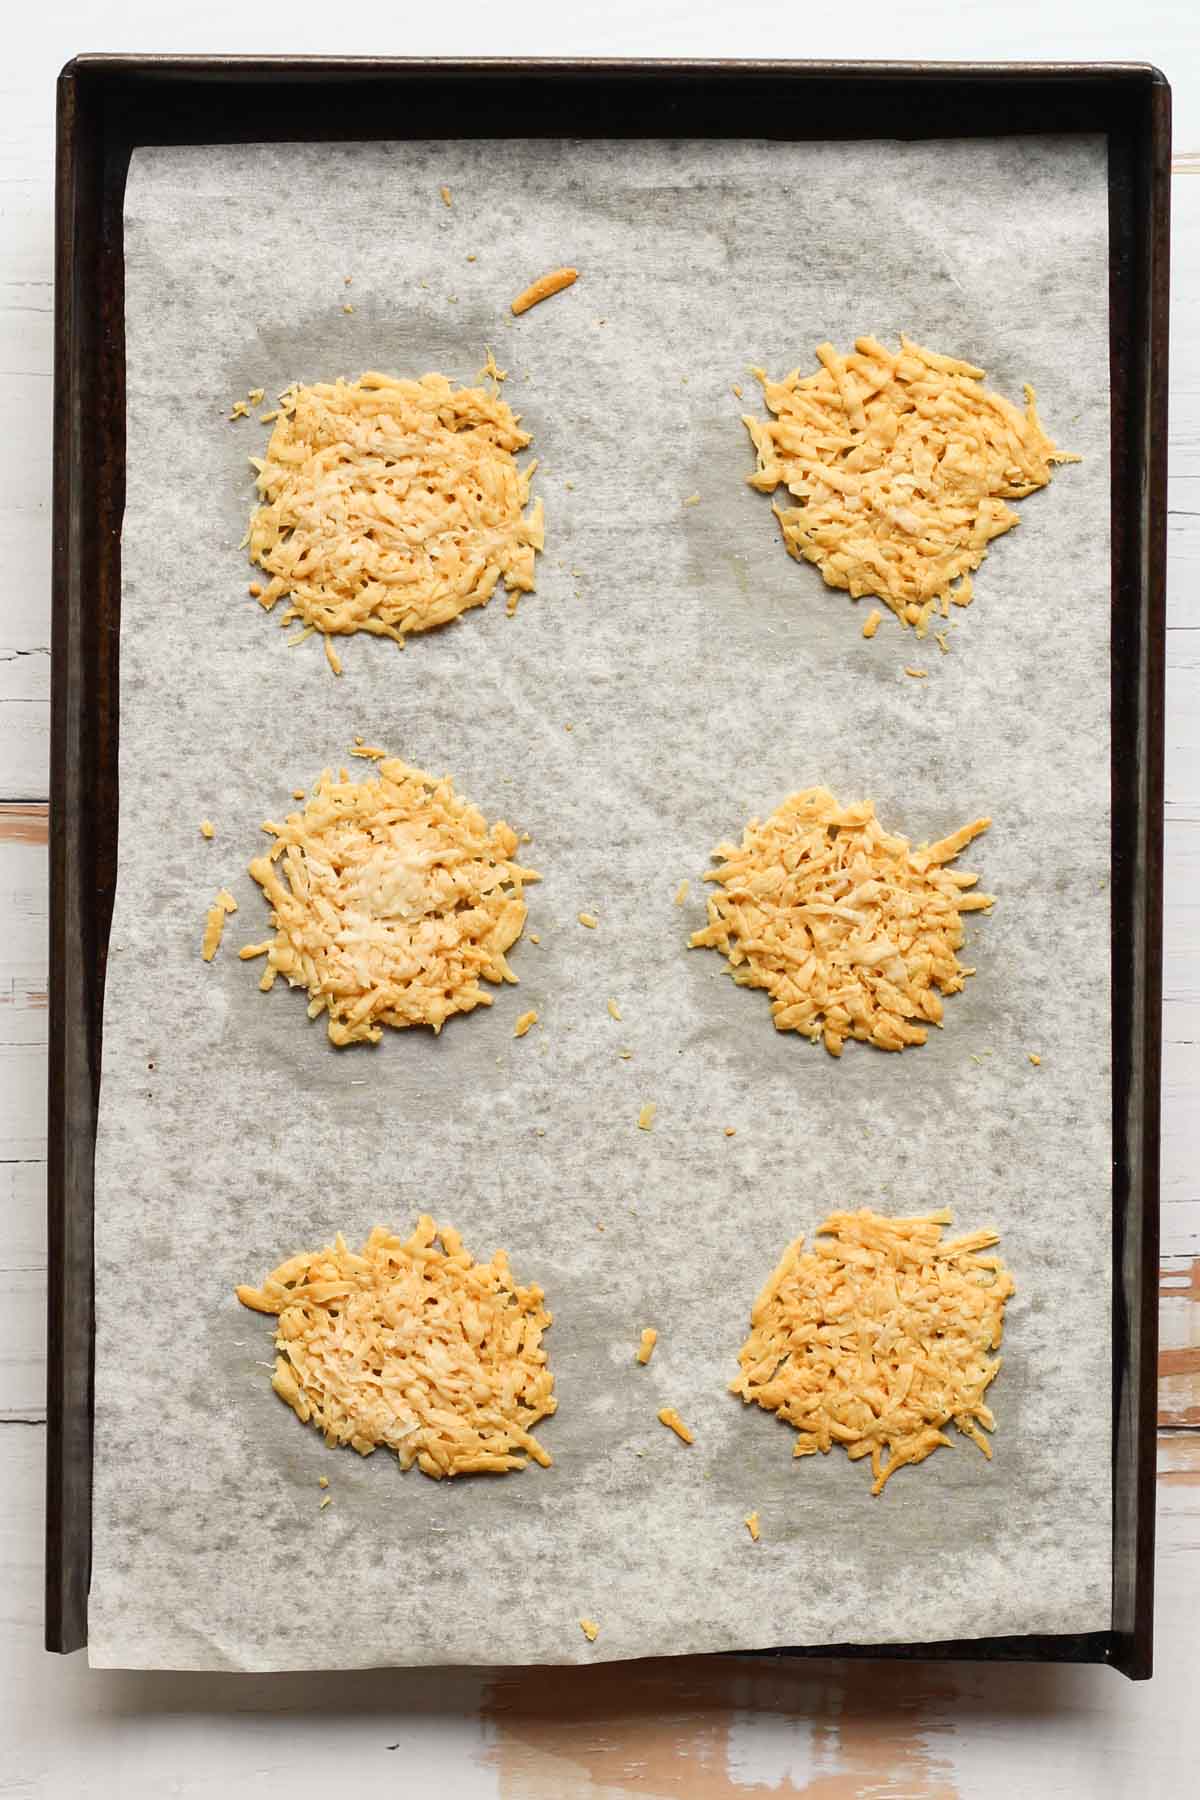 Baked pecorino Romano cheese crisps on a sheet pan